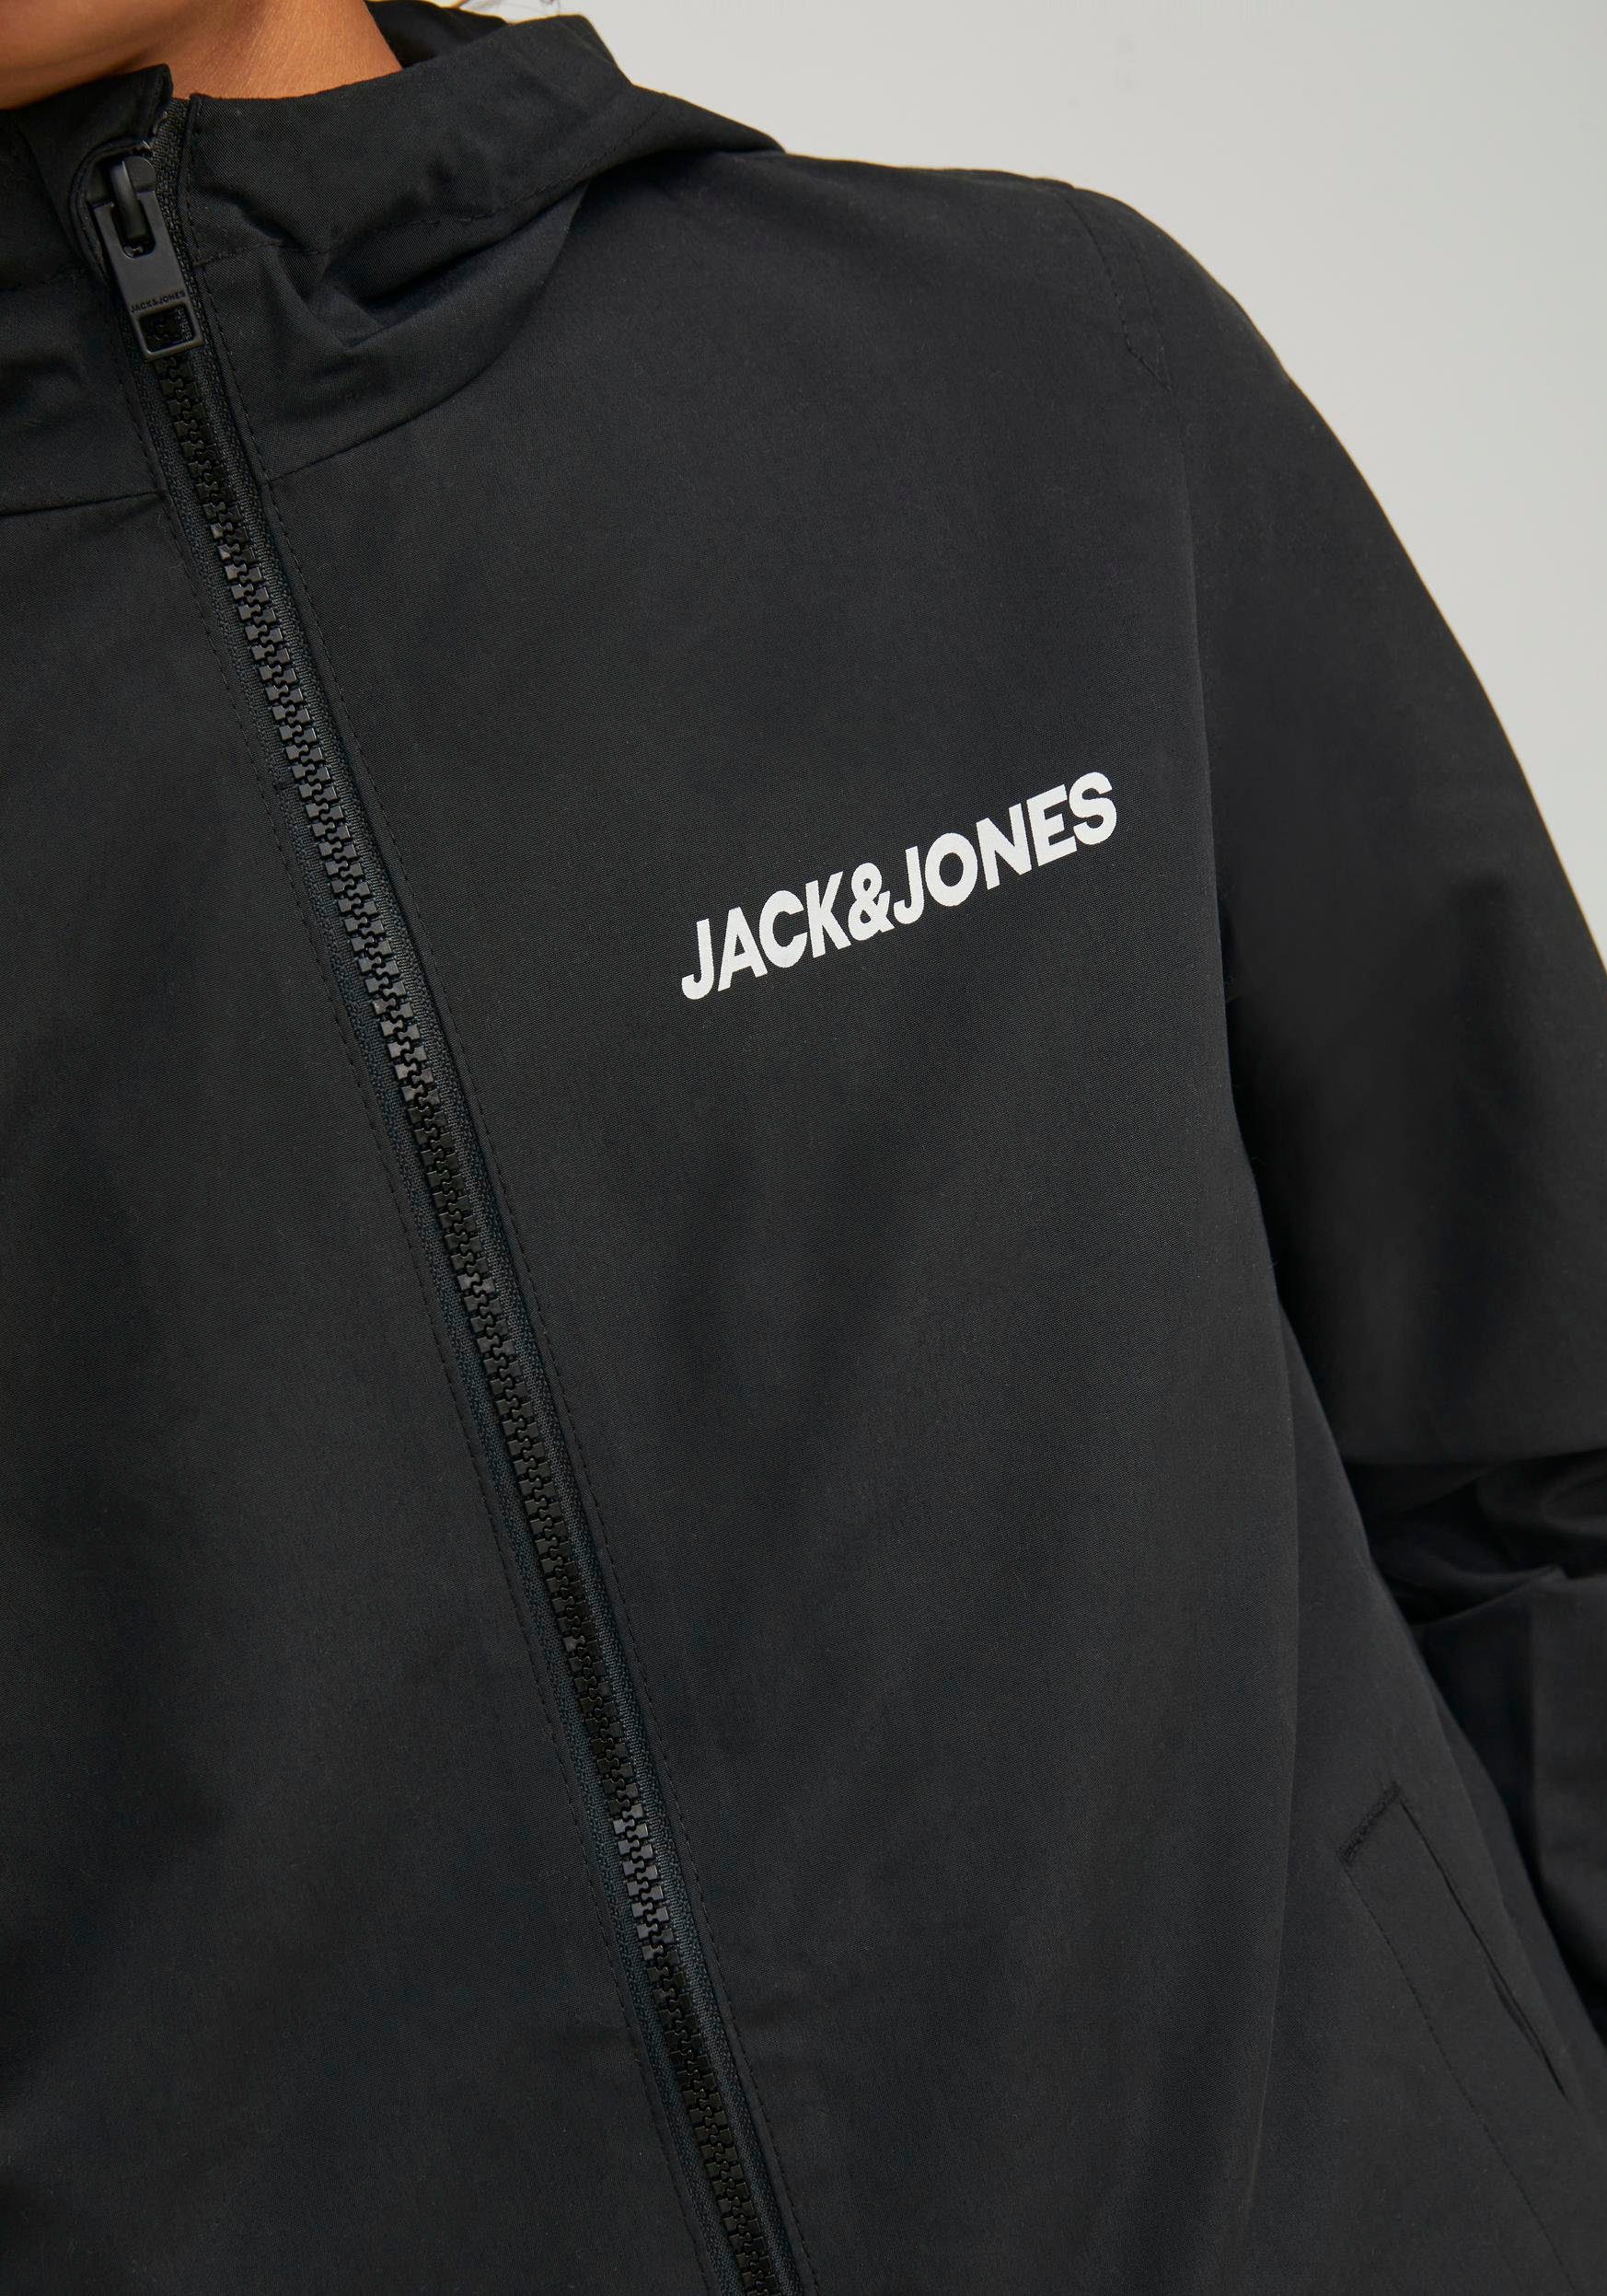 Jack HOOD JJERUSH Junior Outdoorjacke Black BLOCKING & Jones